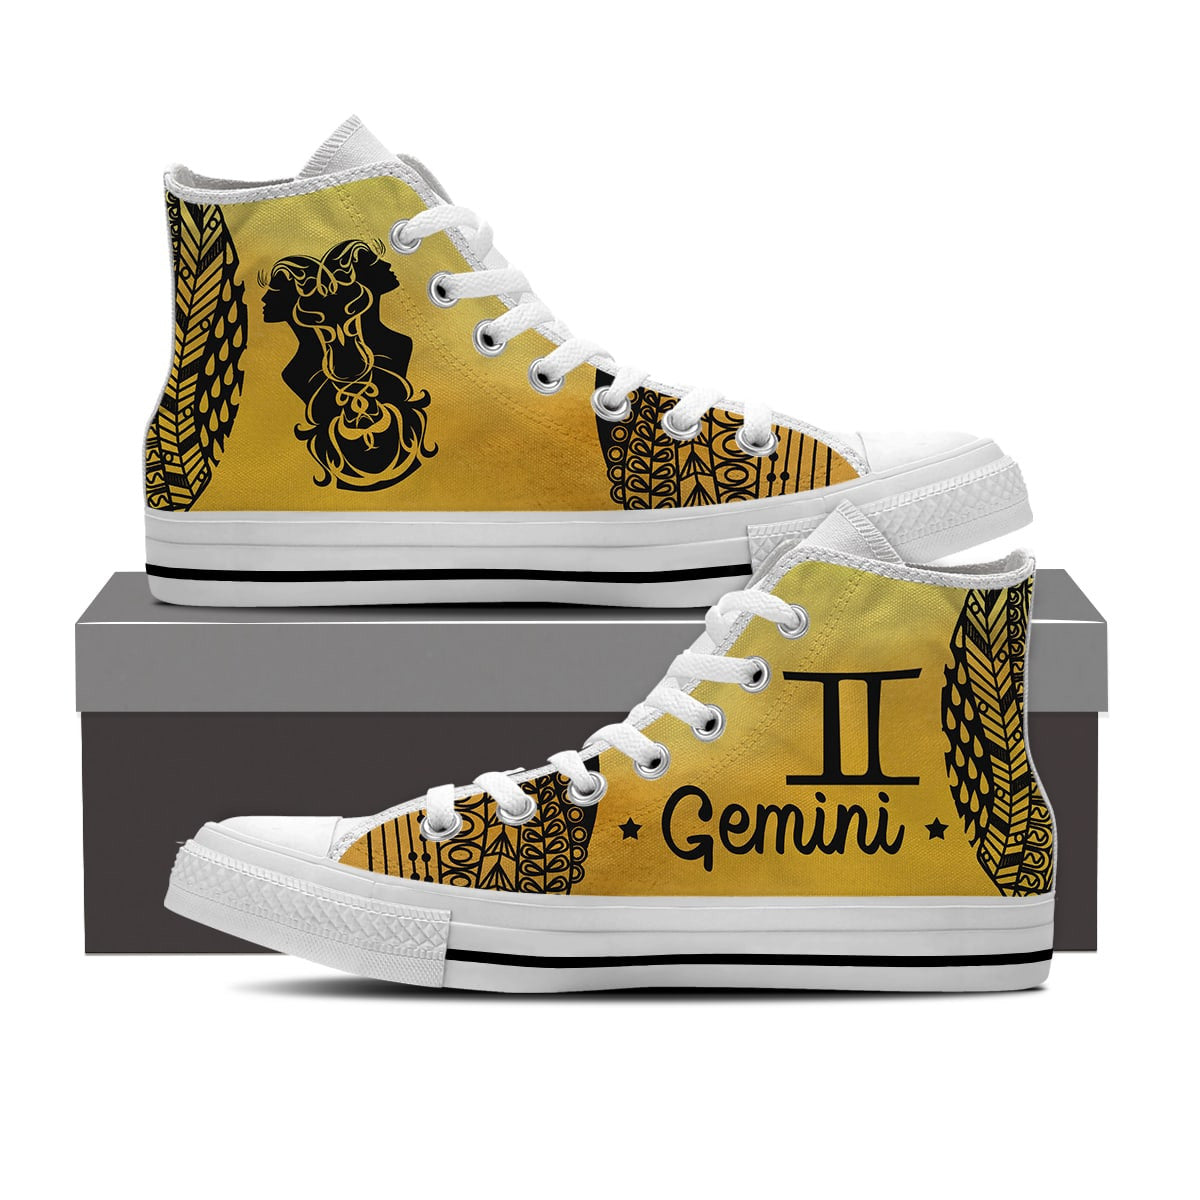 Gemini Shoes